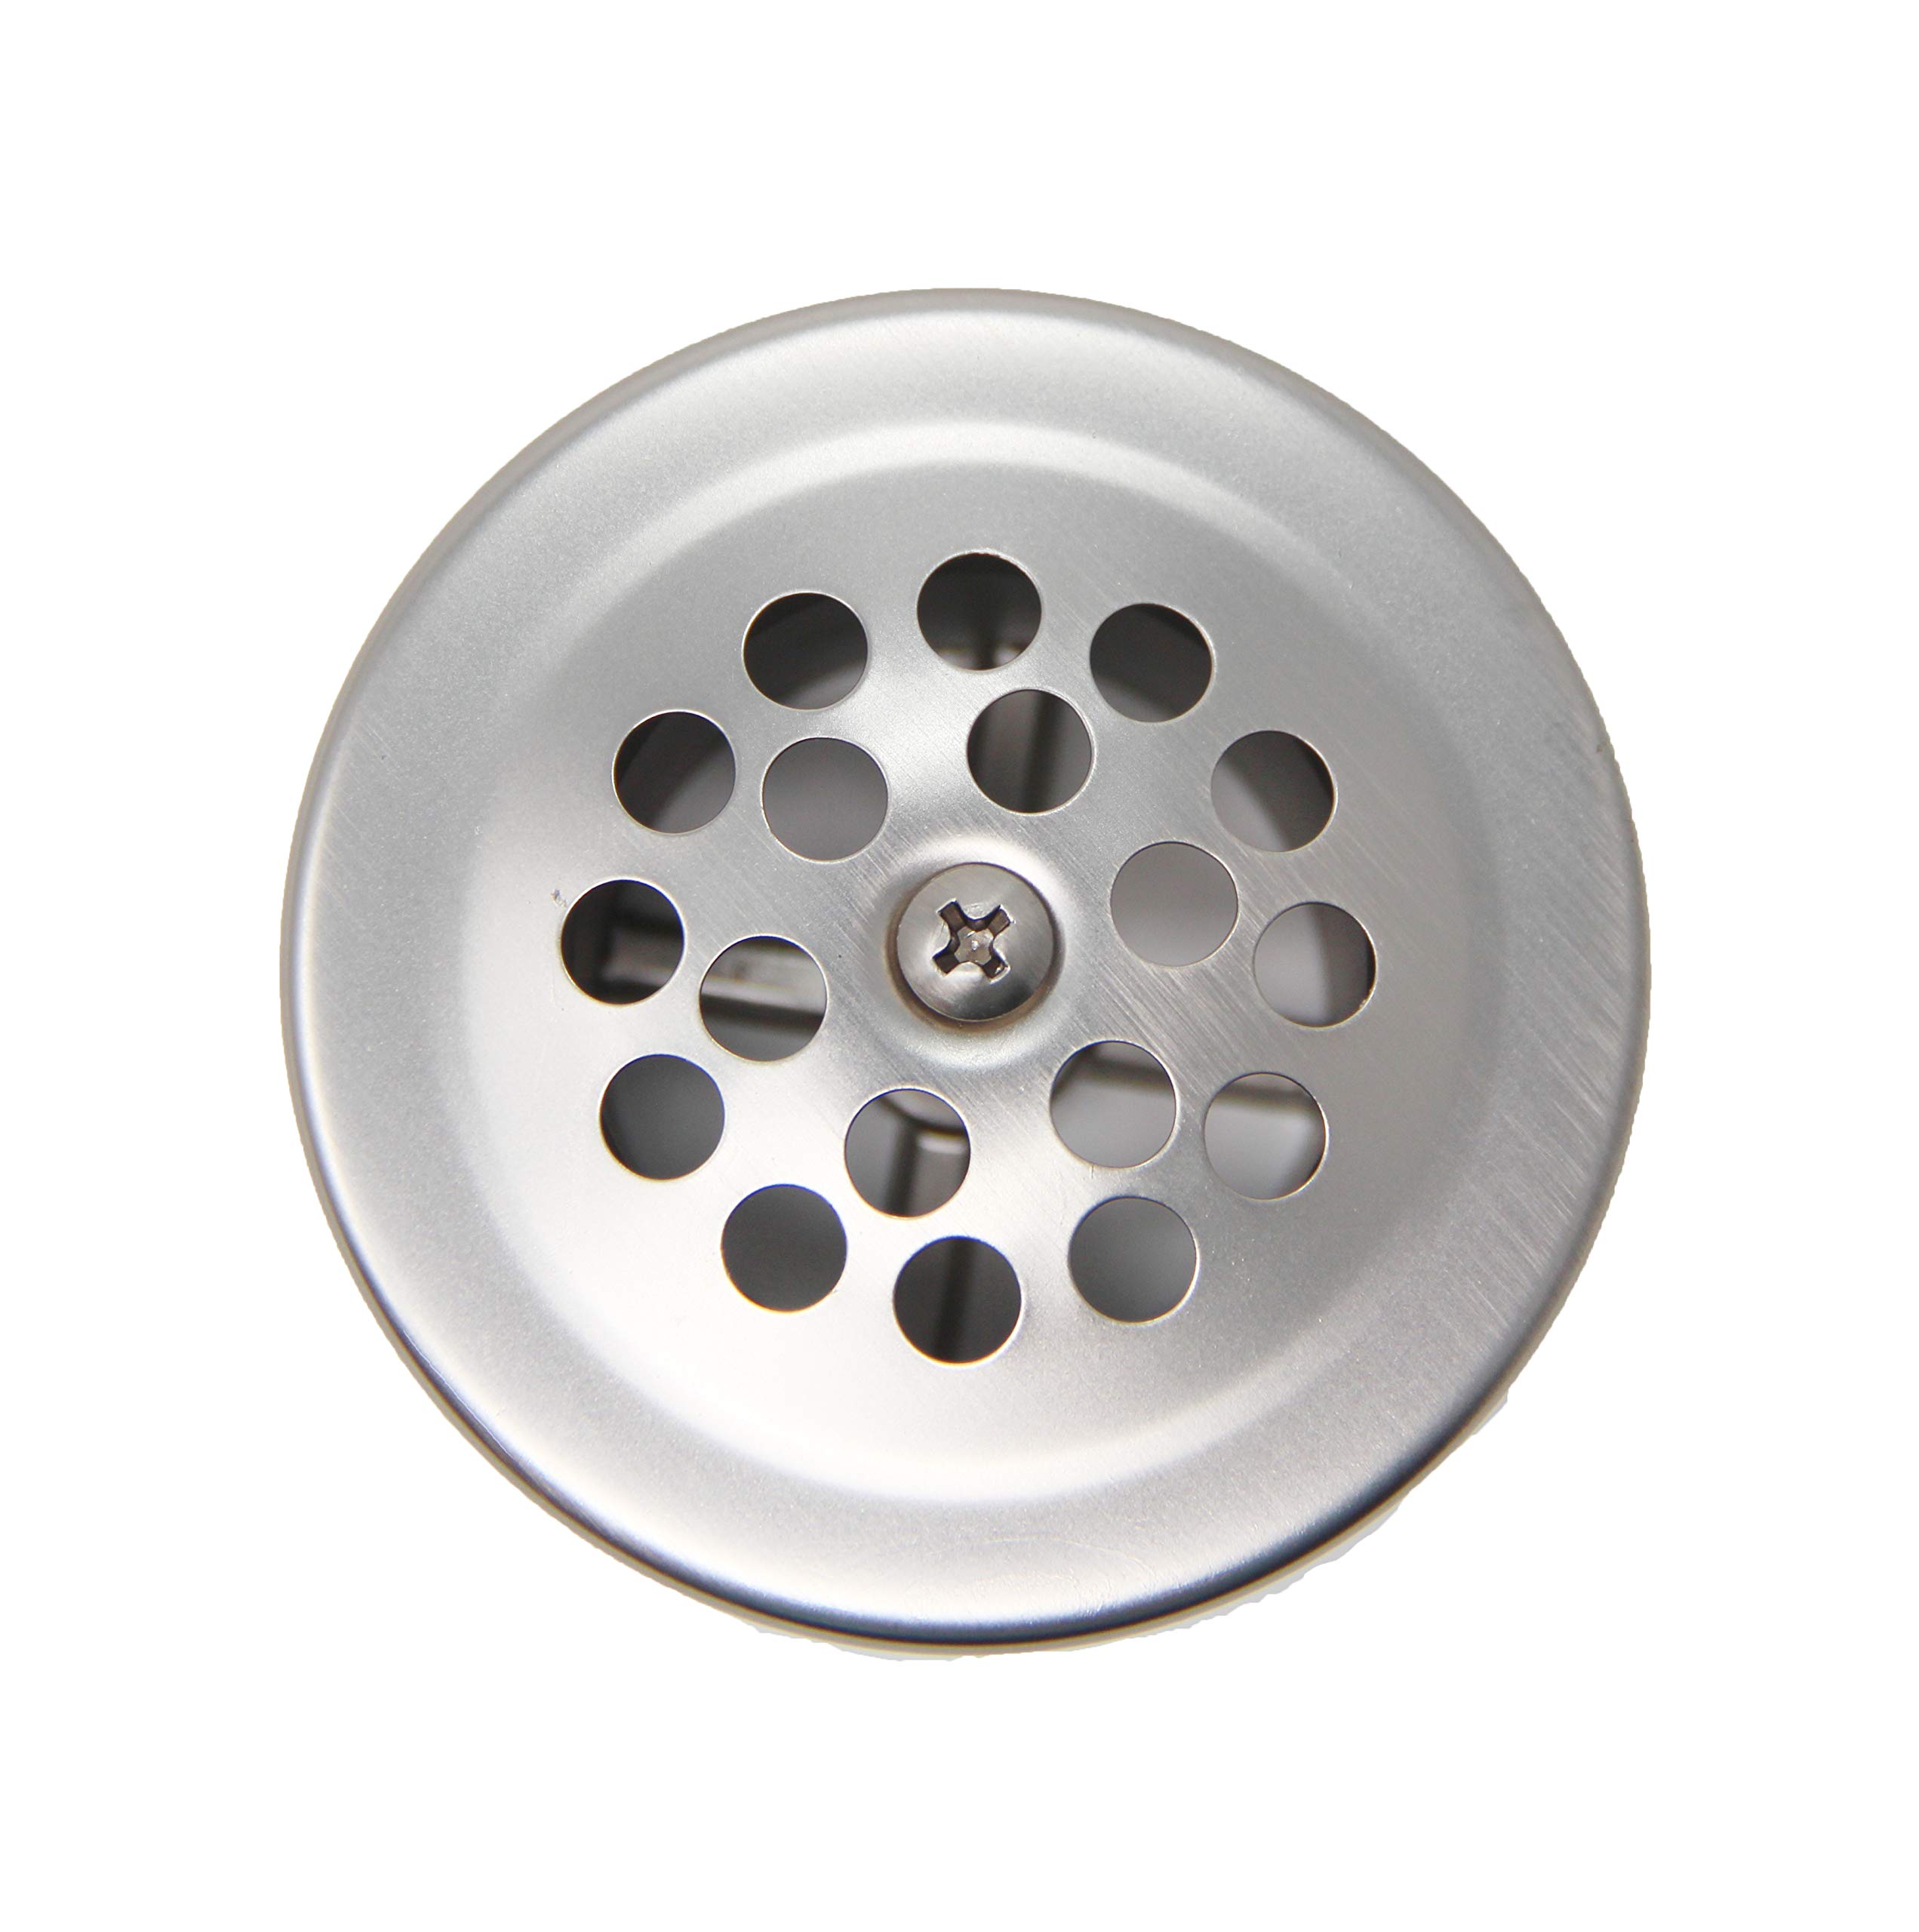 PF WaterWorks Bathtub/Bath Tub Drain Shoe Grid/Strainer Cover with Matching Screw;Brushed Nickel; PF0915-BN